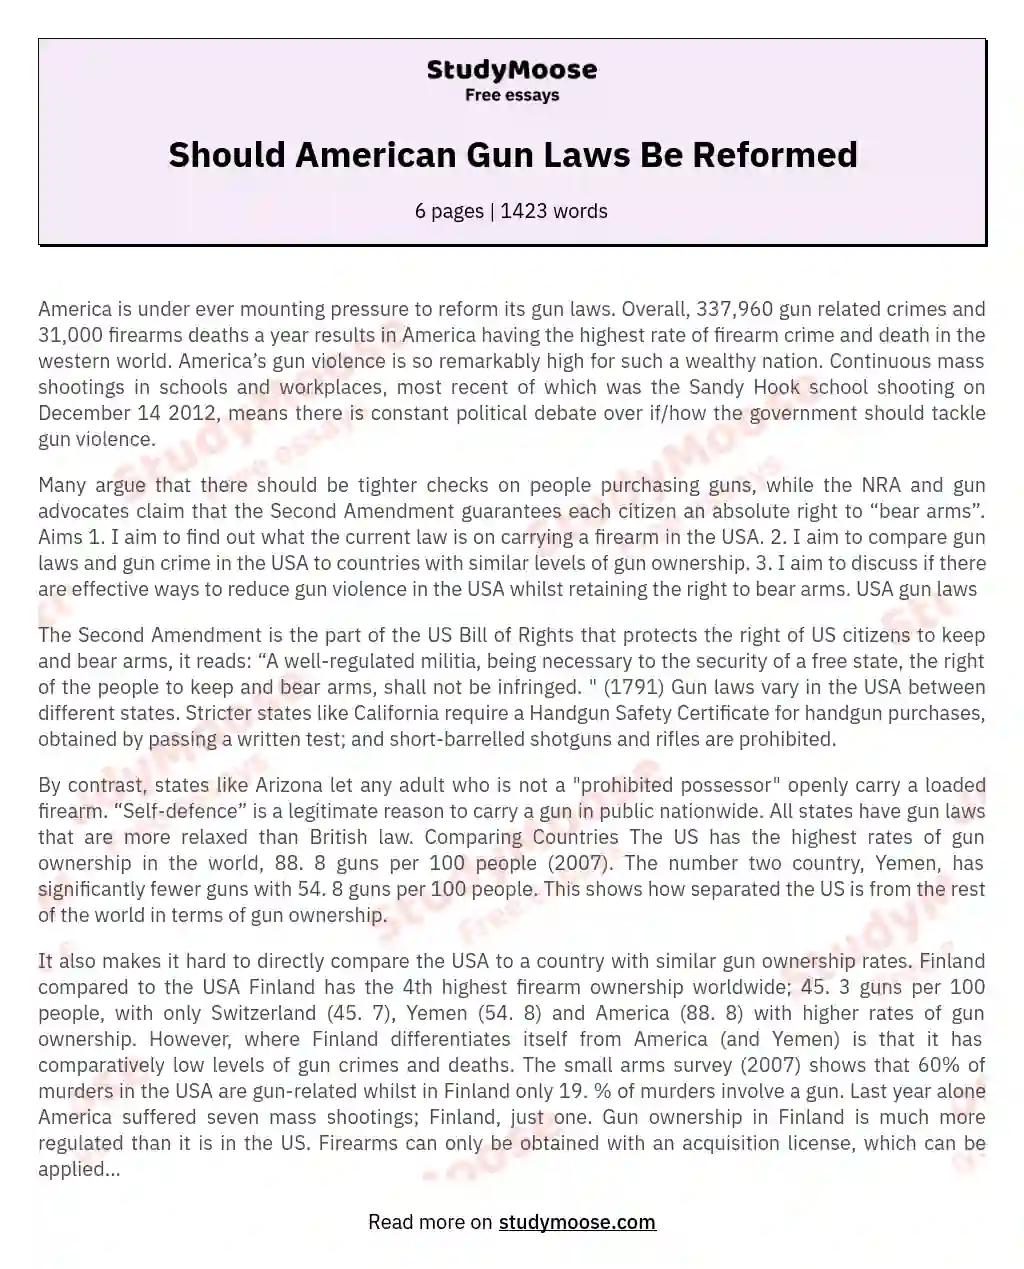 Should American Gun Laws Be Reformed essay